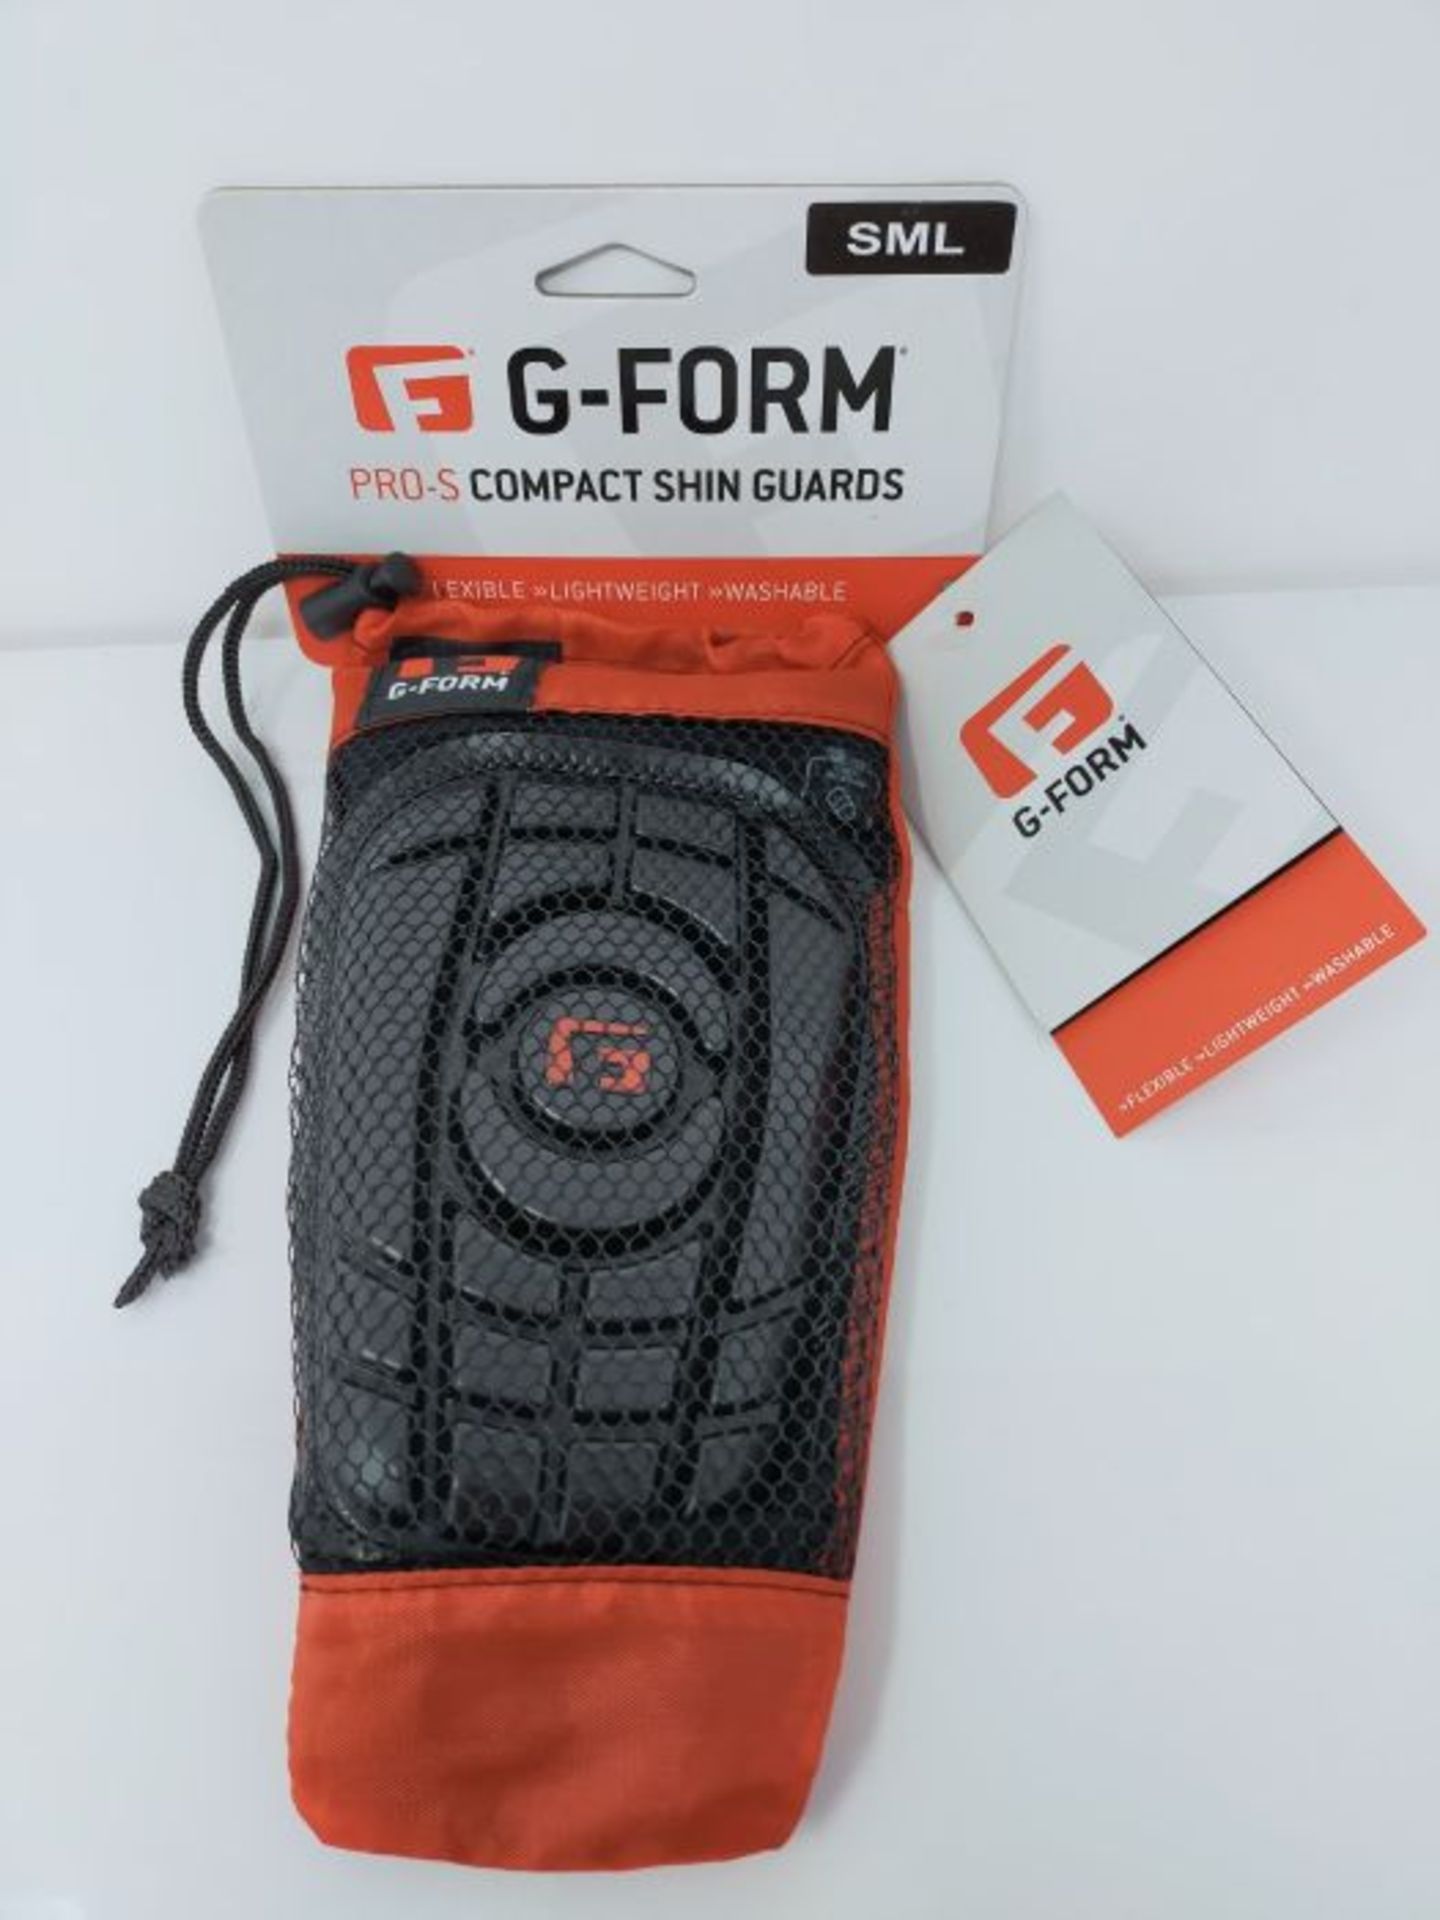 G-Form Men's Pro-S Compact Shin Guards for Football Shin Pads, Kickboxing, Hockey Prov - Image 2 of 3